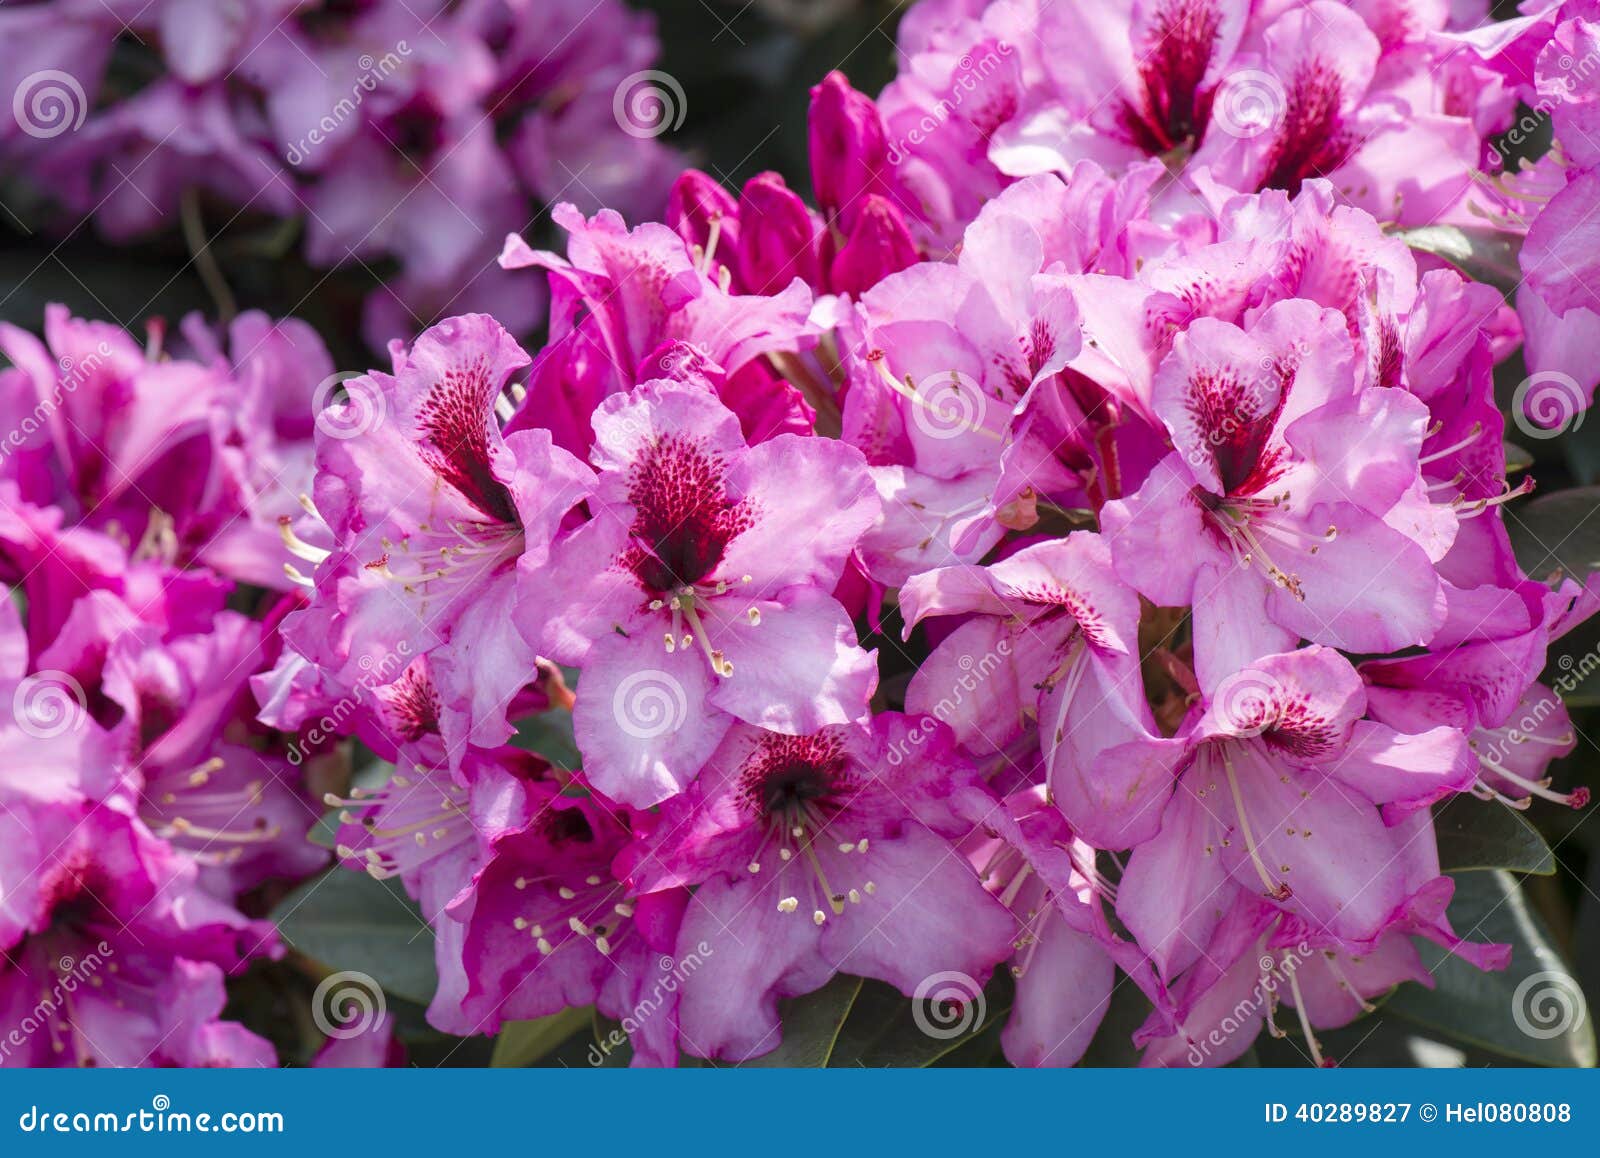 pink azalea flowering in vibrant color